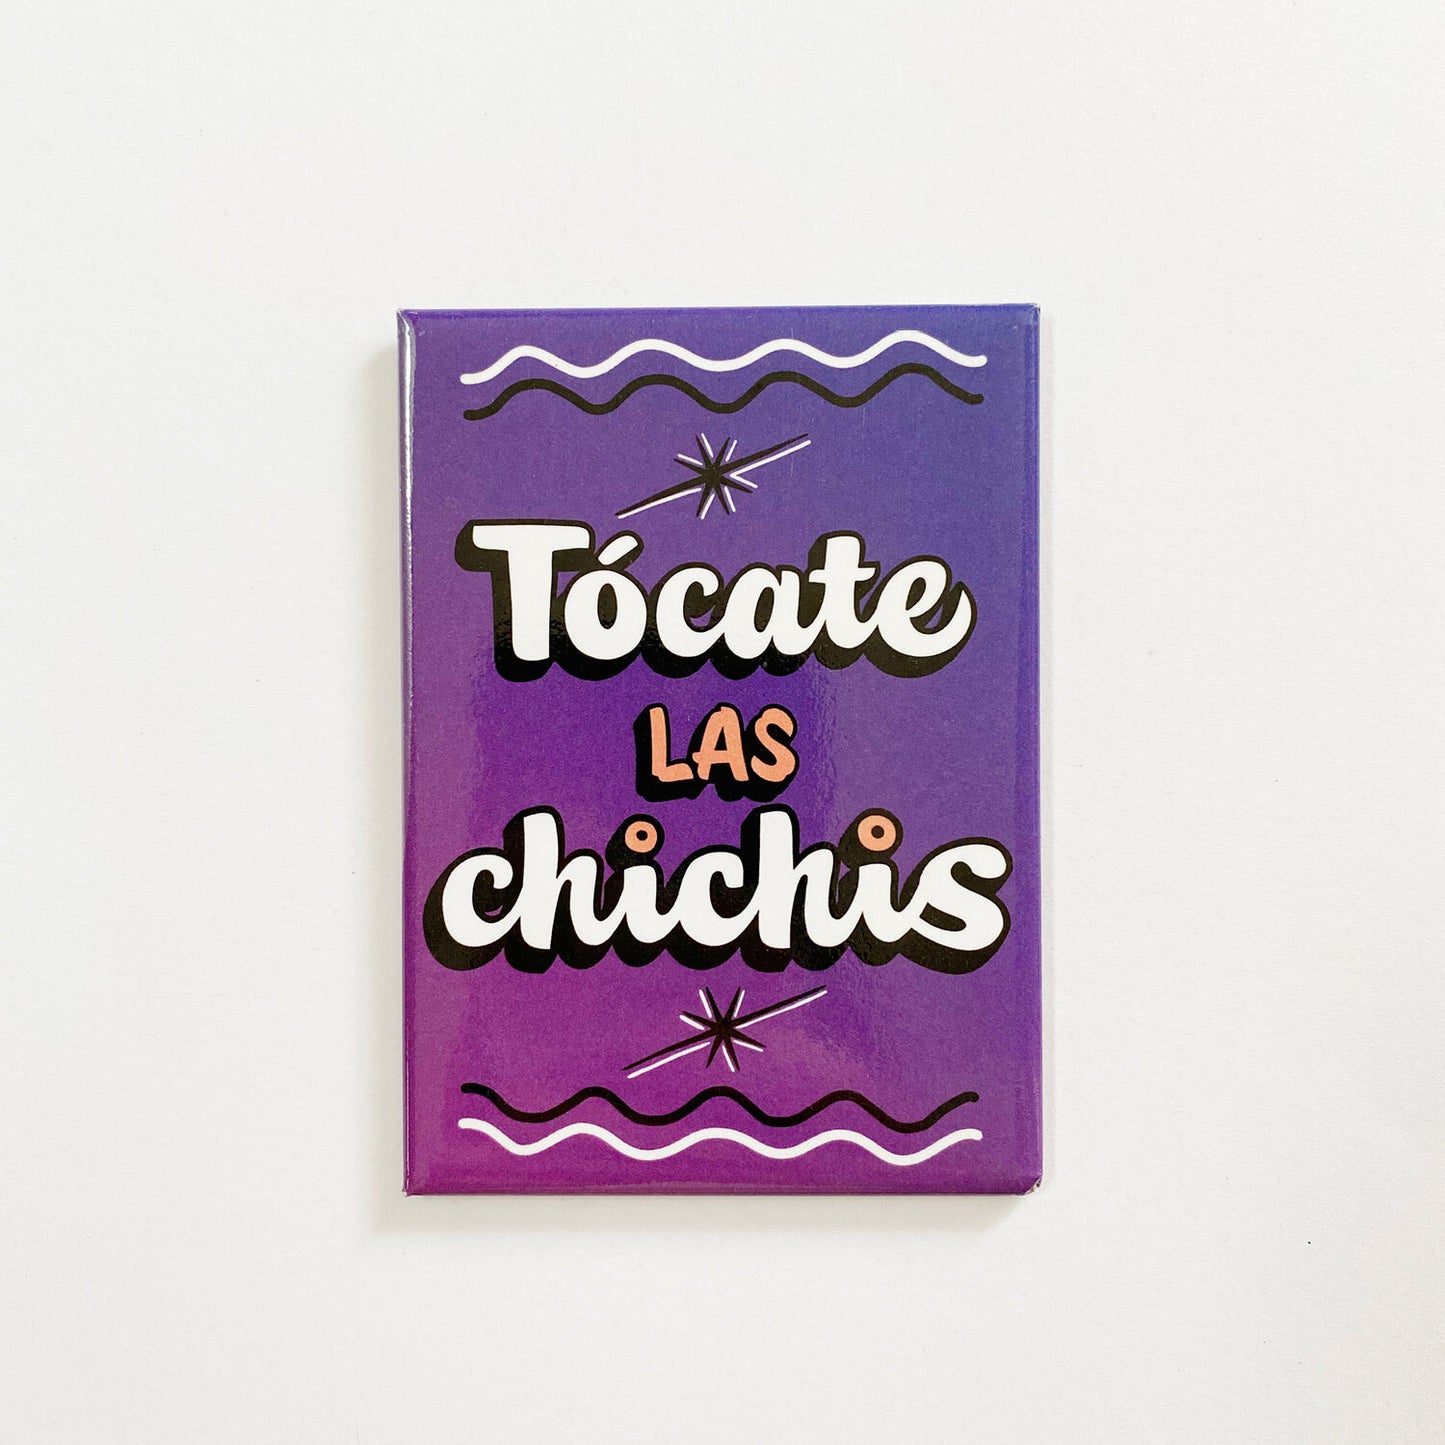 Magnet: "Tócate Las Chichis" by Alina Kiliwa